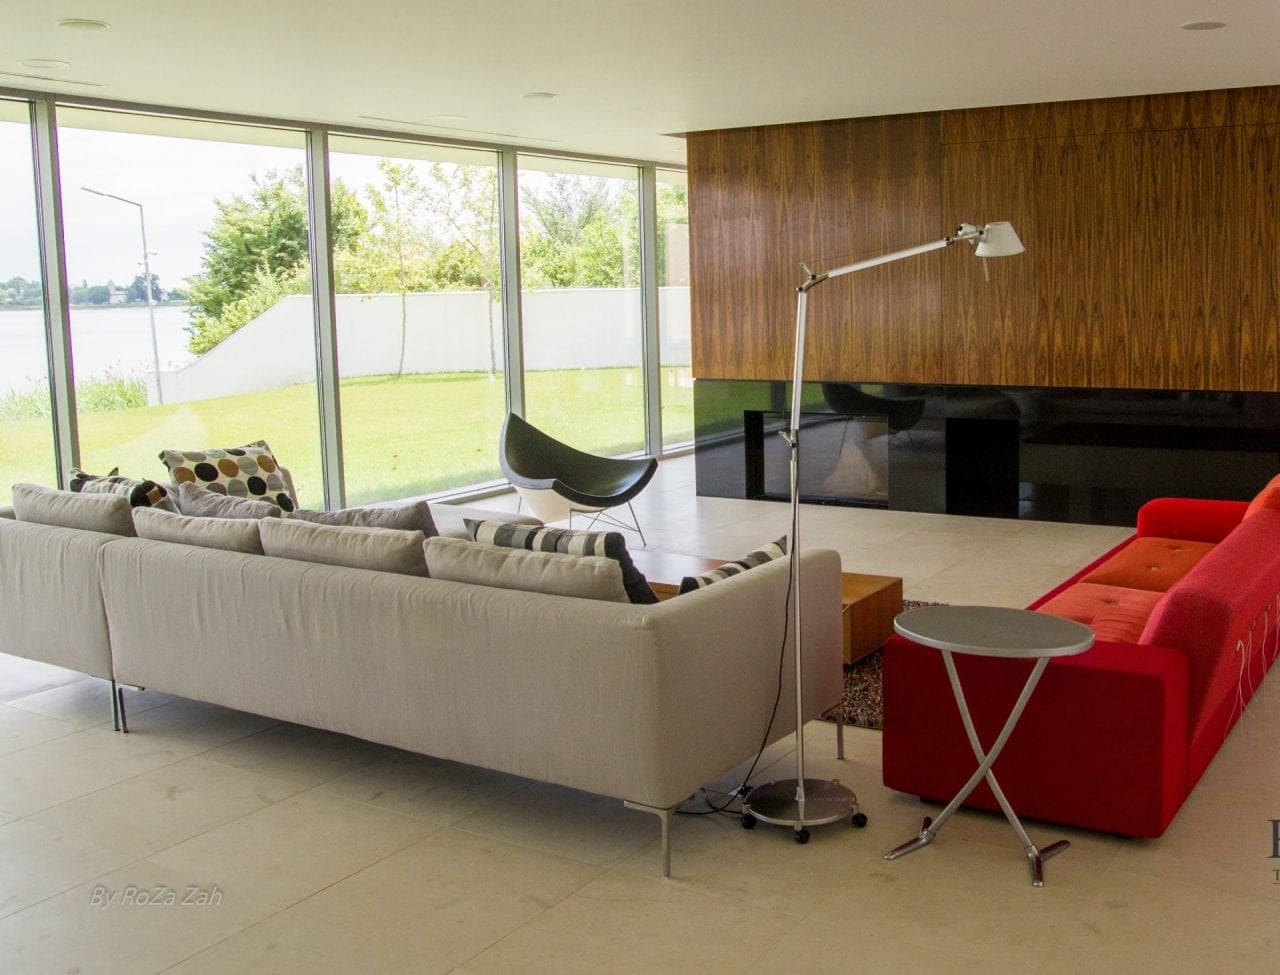 IMG 6792 - Casa de pe lac, lux in stil minimalist